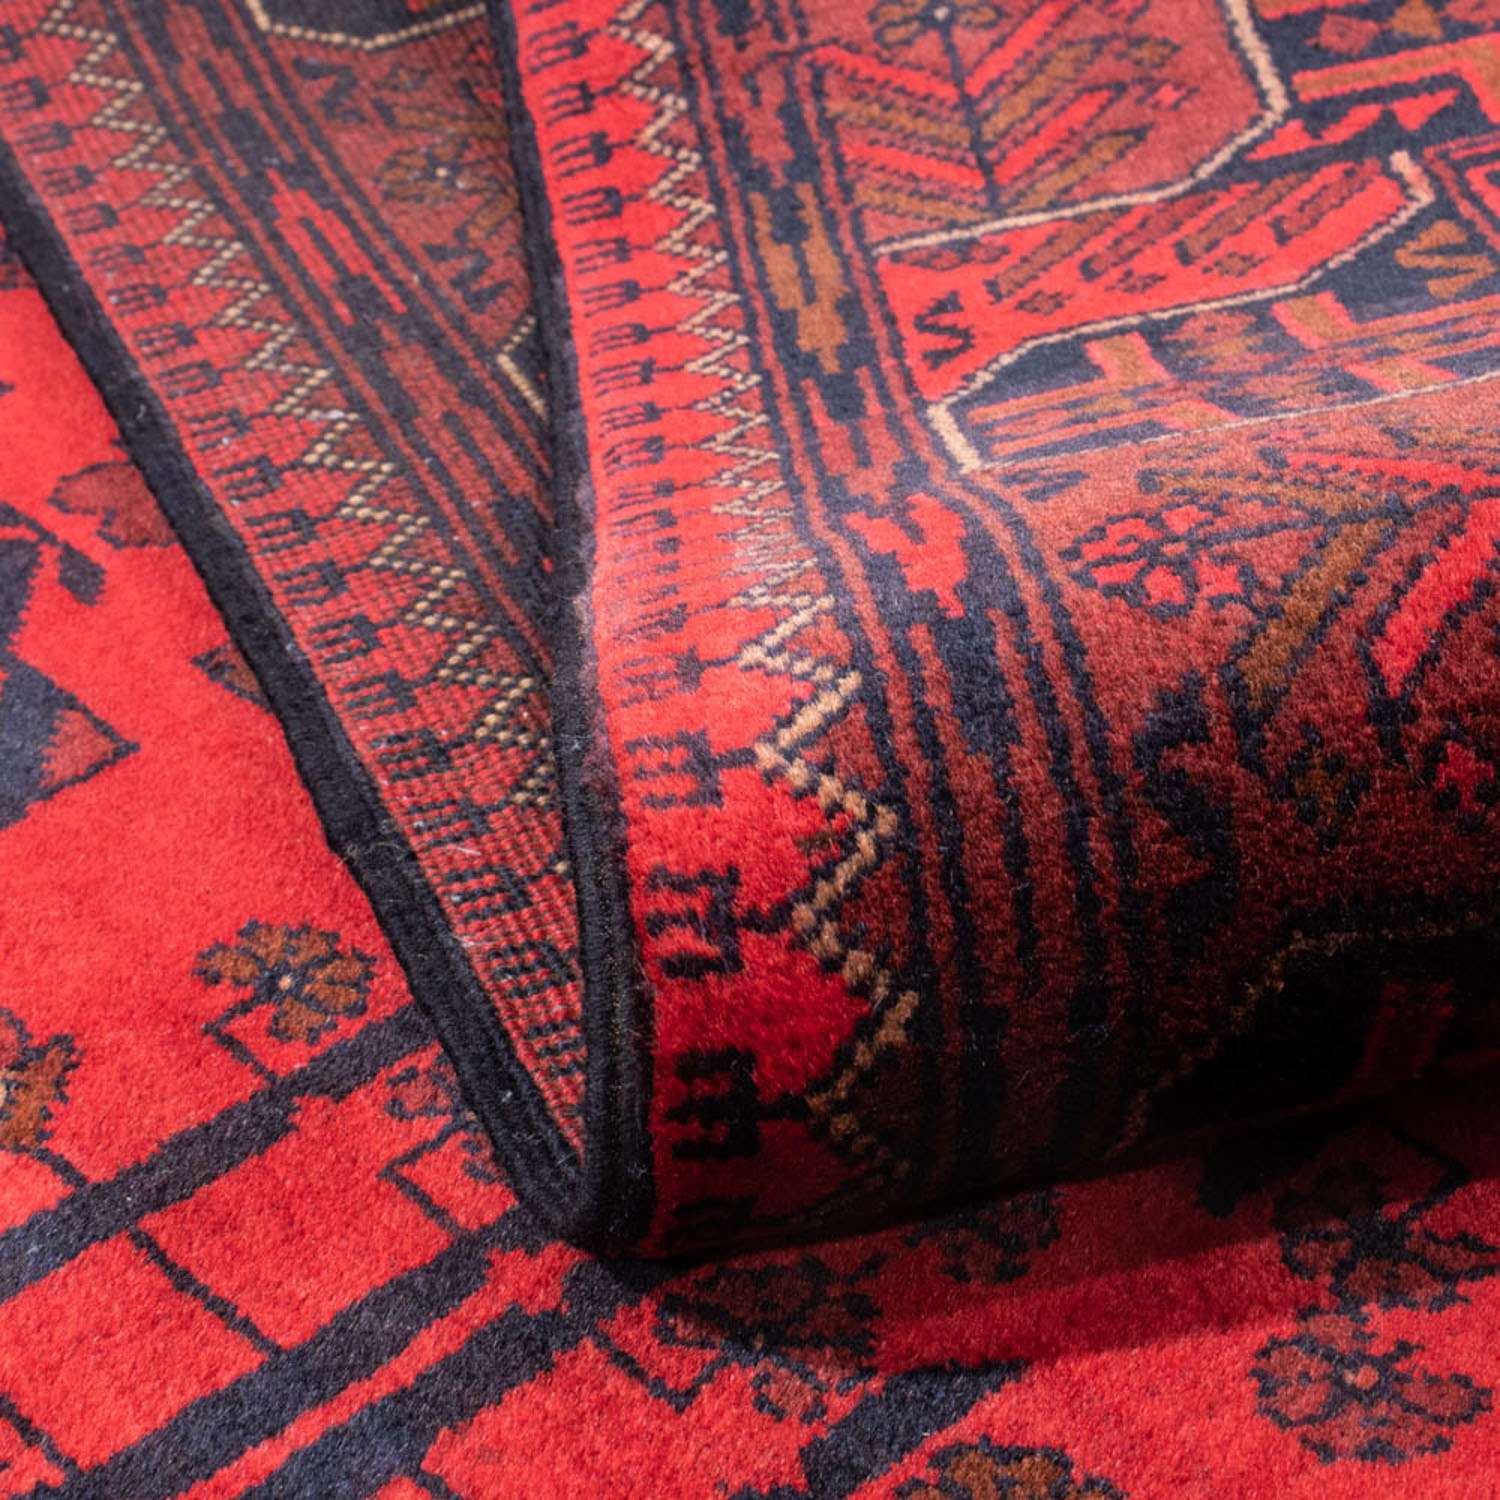 Afghan Rug - Kunduz - 195 x 128 cm - red